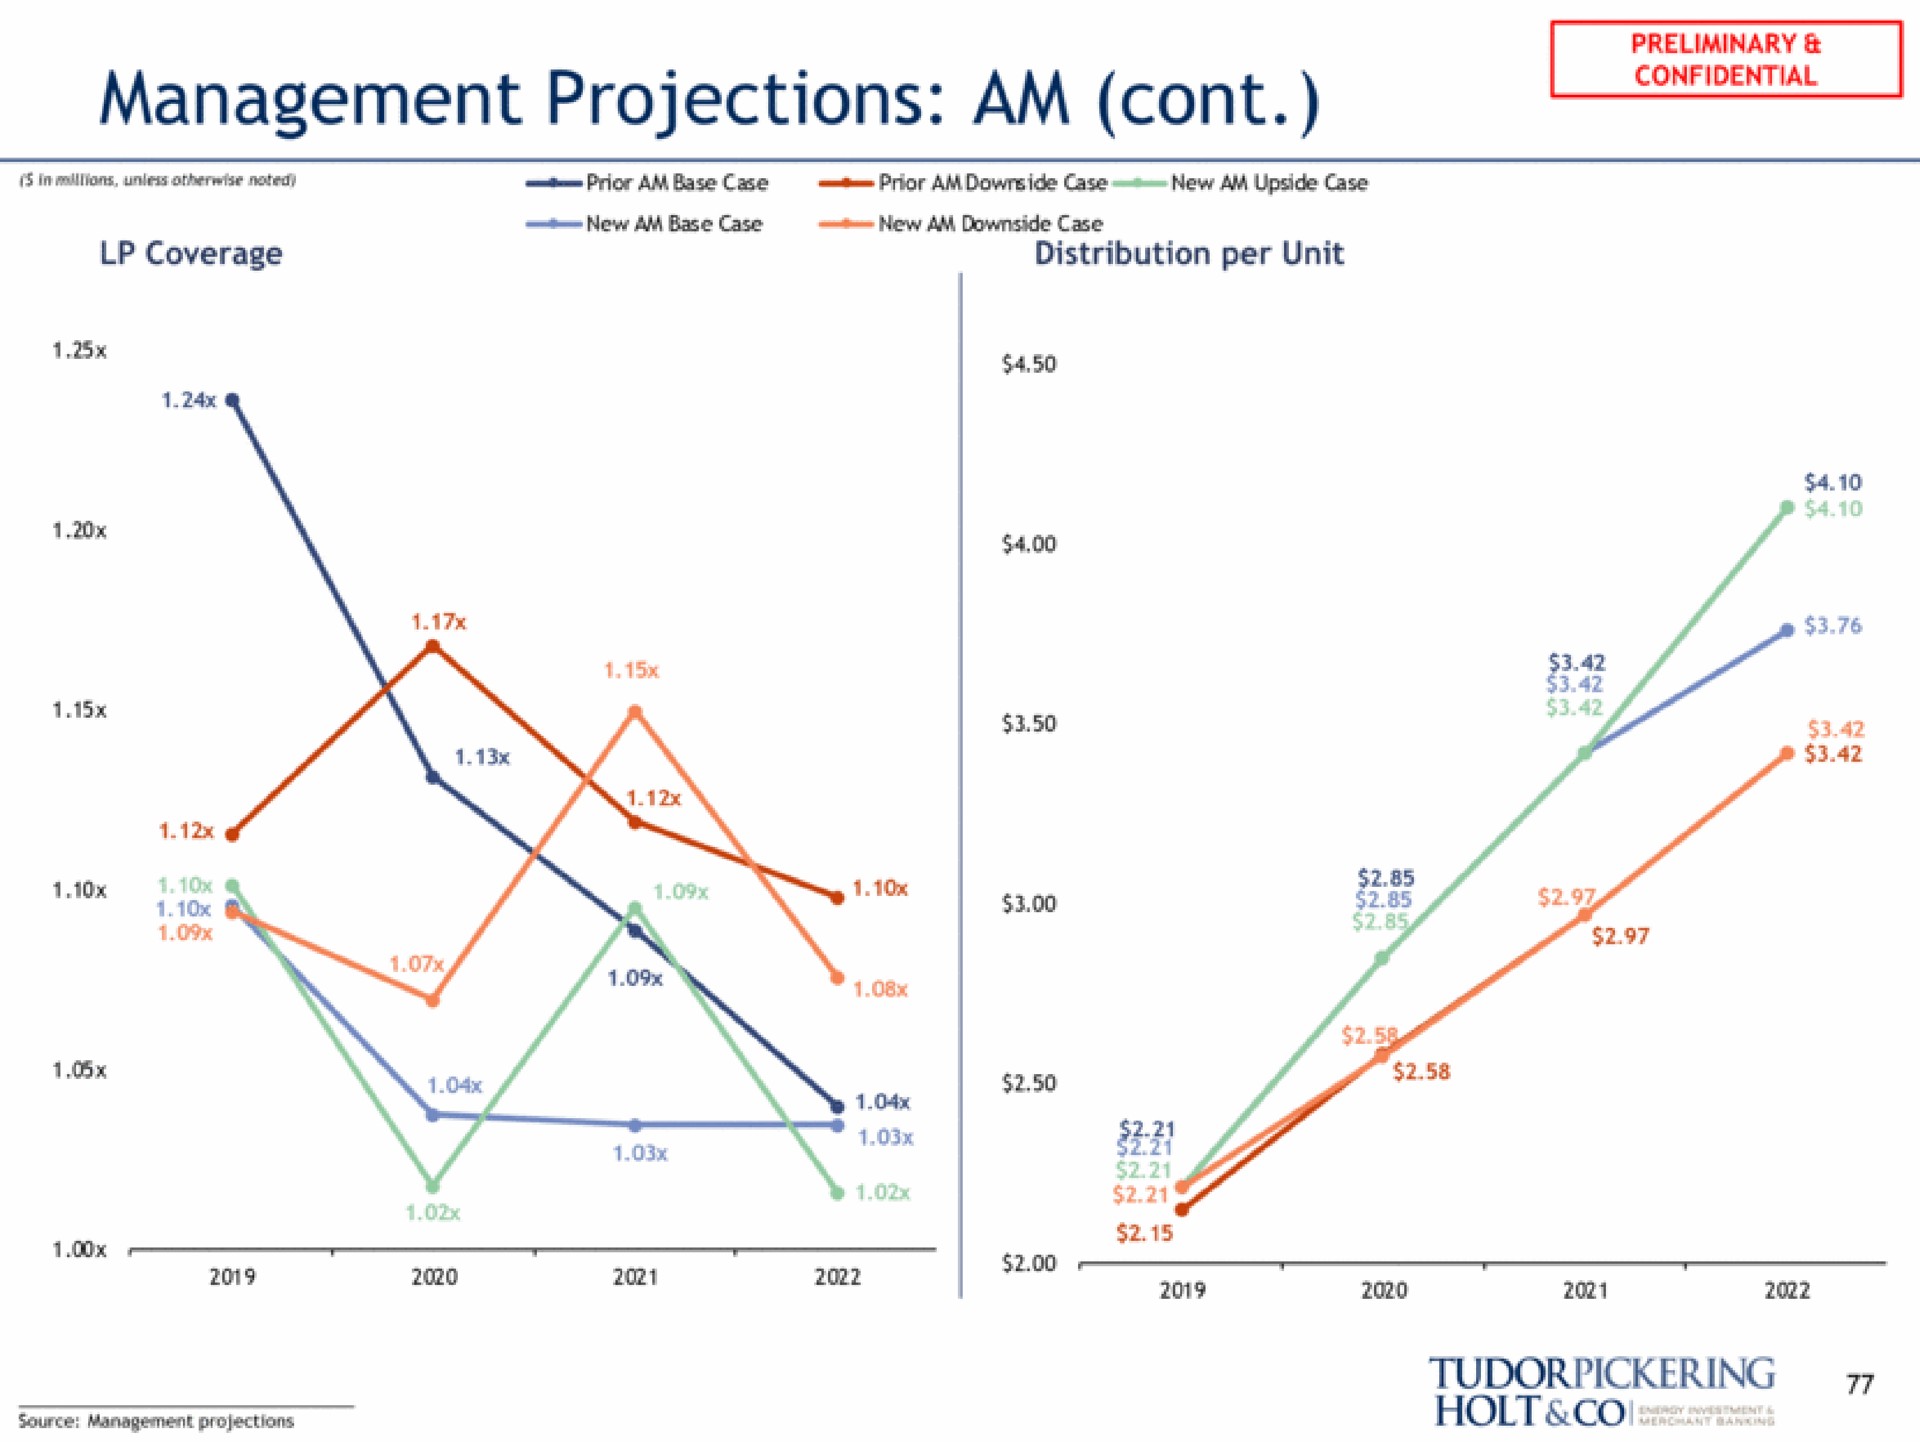 management projections am | Tudor, Pickering, Holt & Co